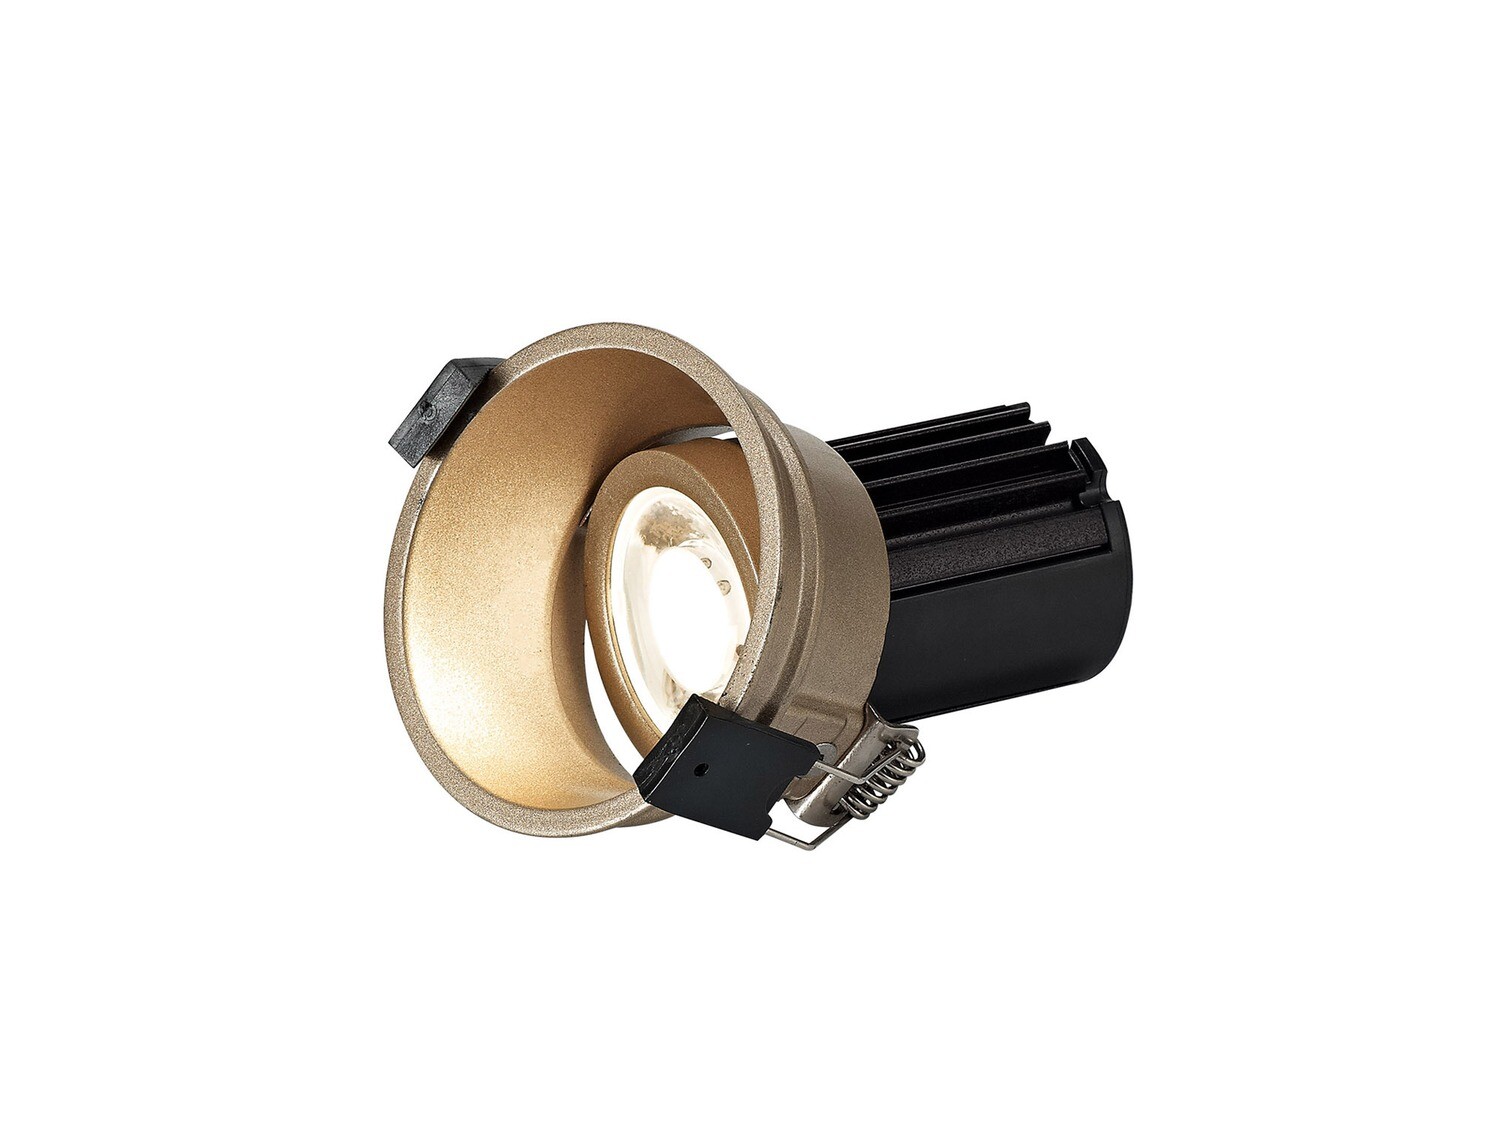 BANIA A adjustable LED Spot-light 10W 810lm Gold